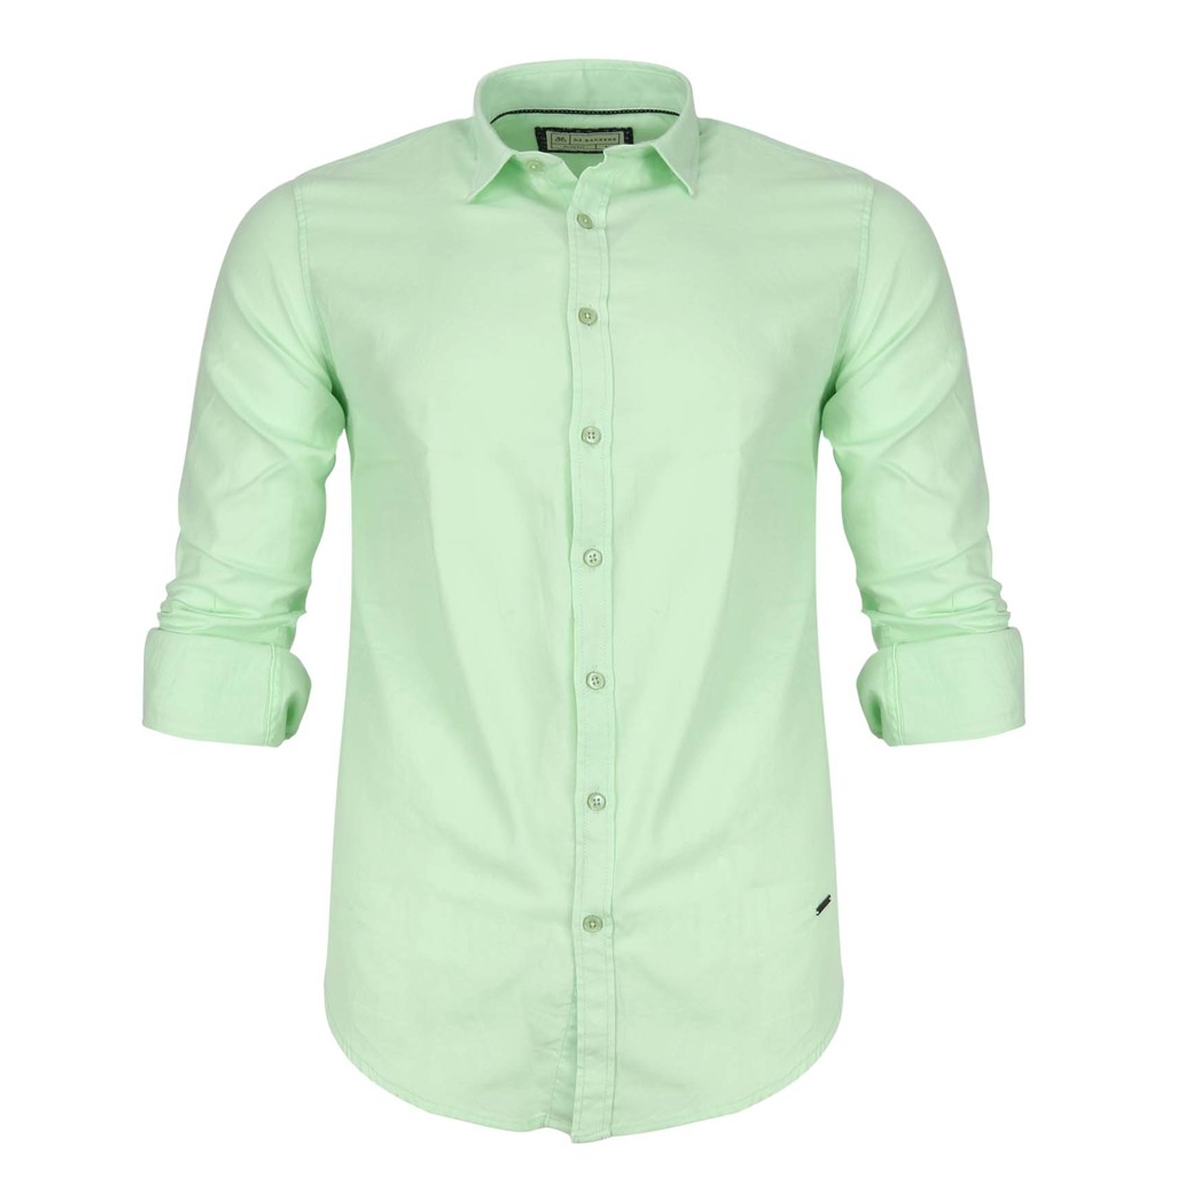 Men's Casual Shirt Long Sleeve 2025 Light Green - Debackers